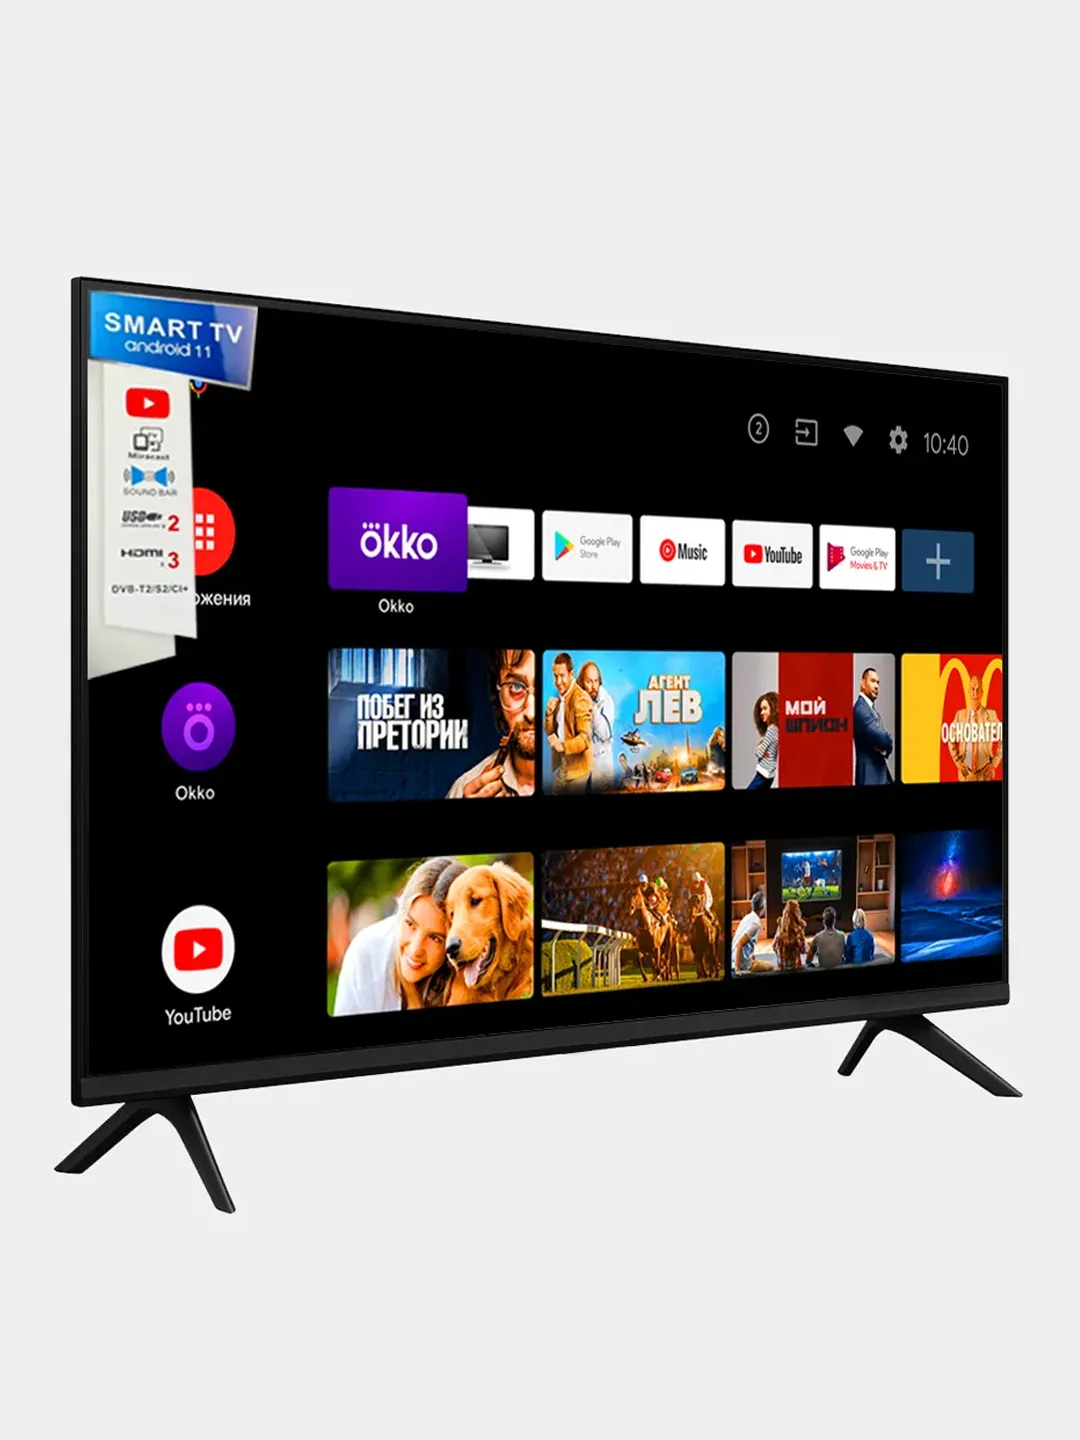 Телевизор Smart TV Q90 35s, 32" с FullHD разрешением, Miracast, Android TV платформой, без Bluetooth